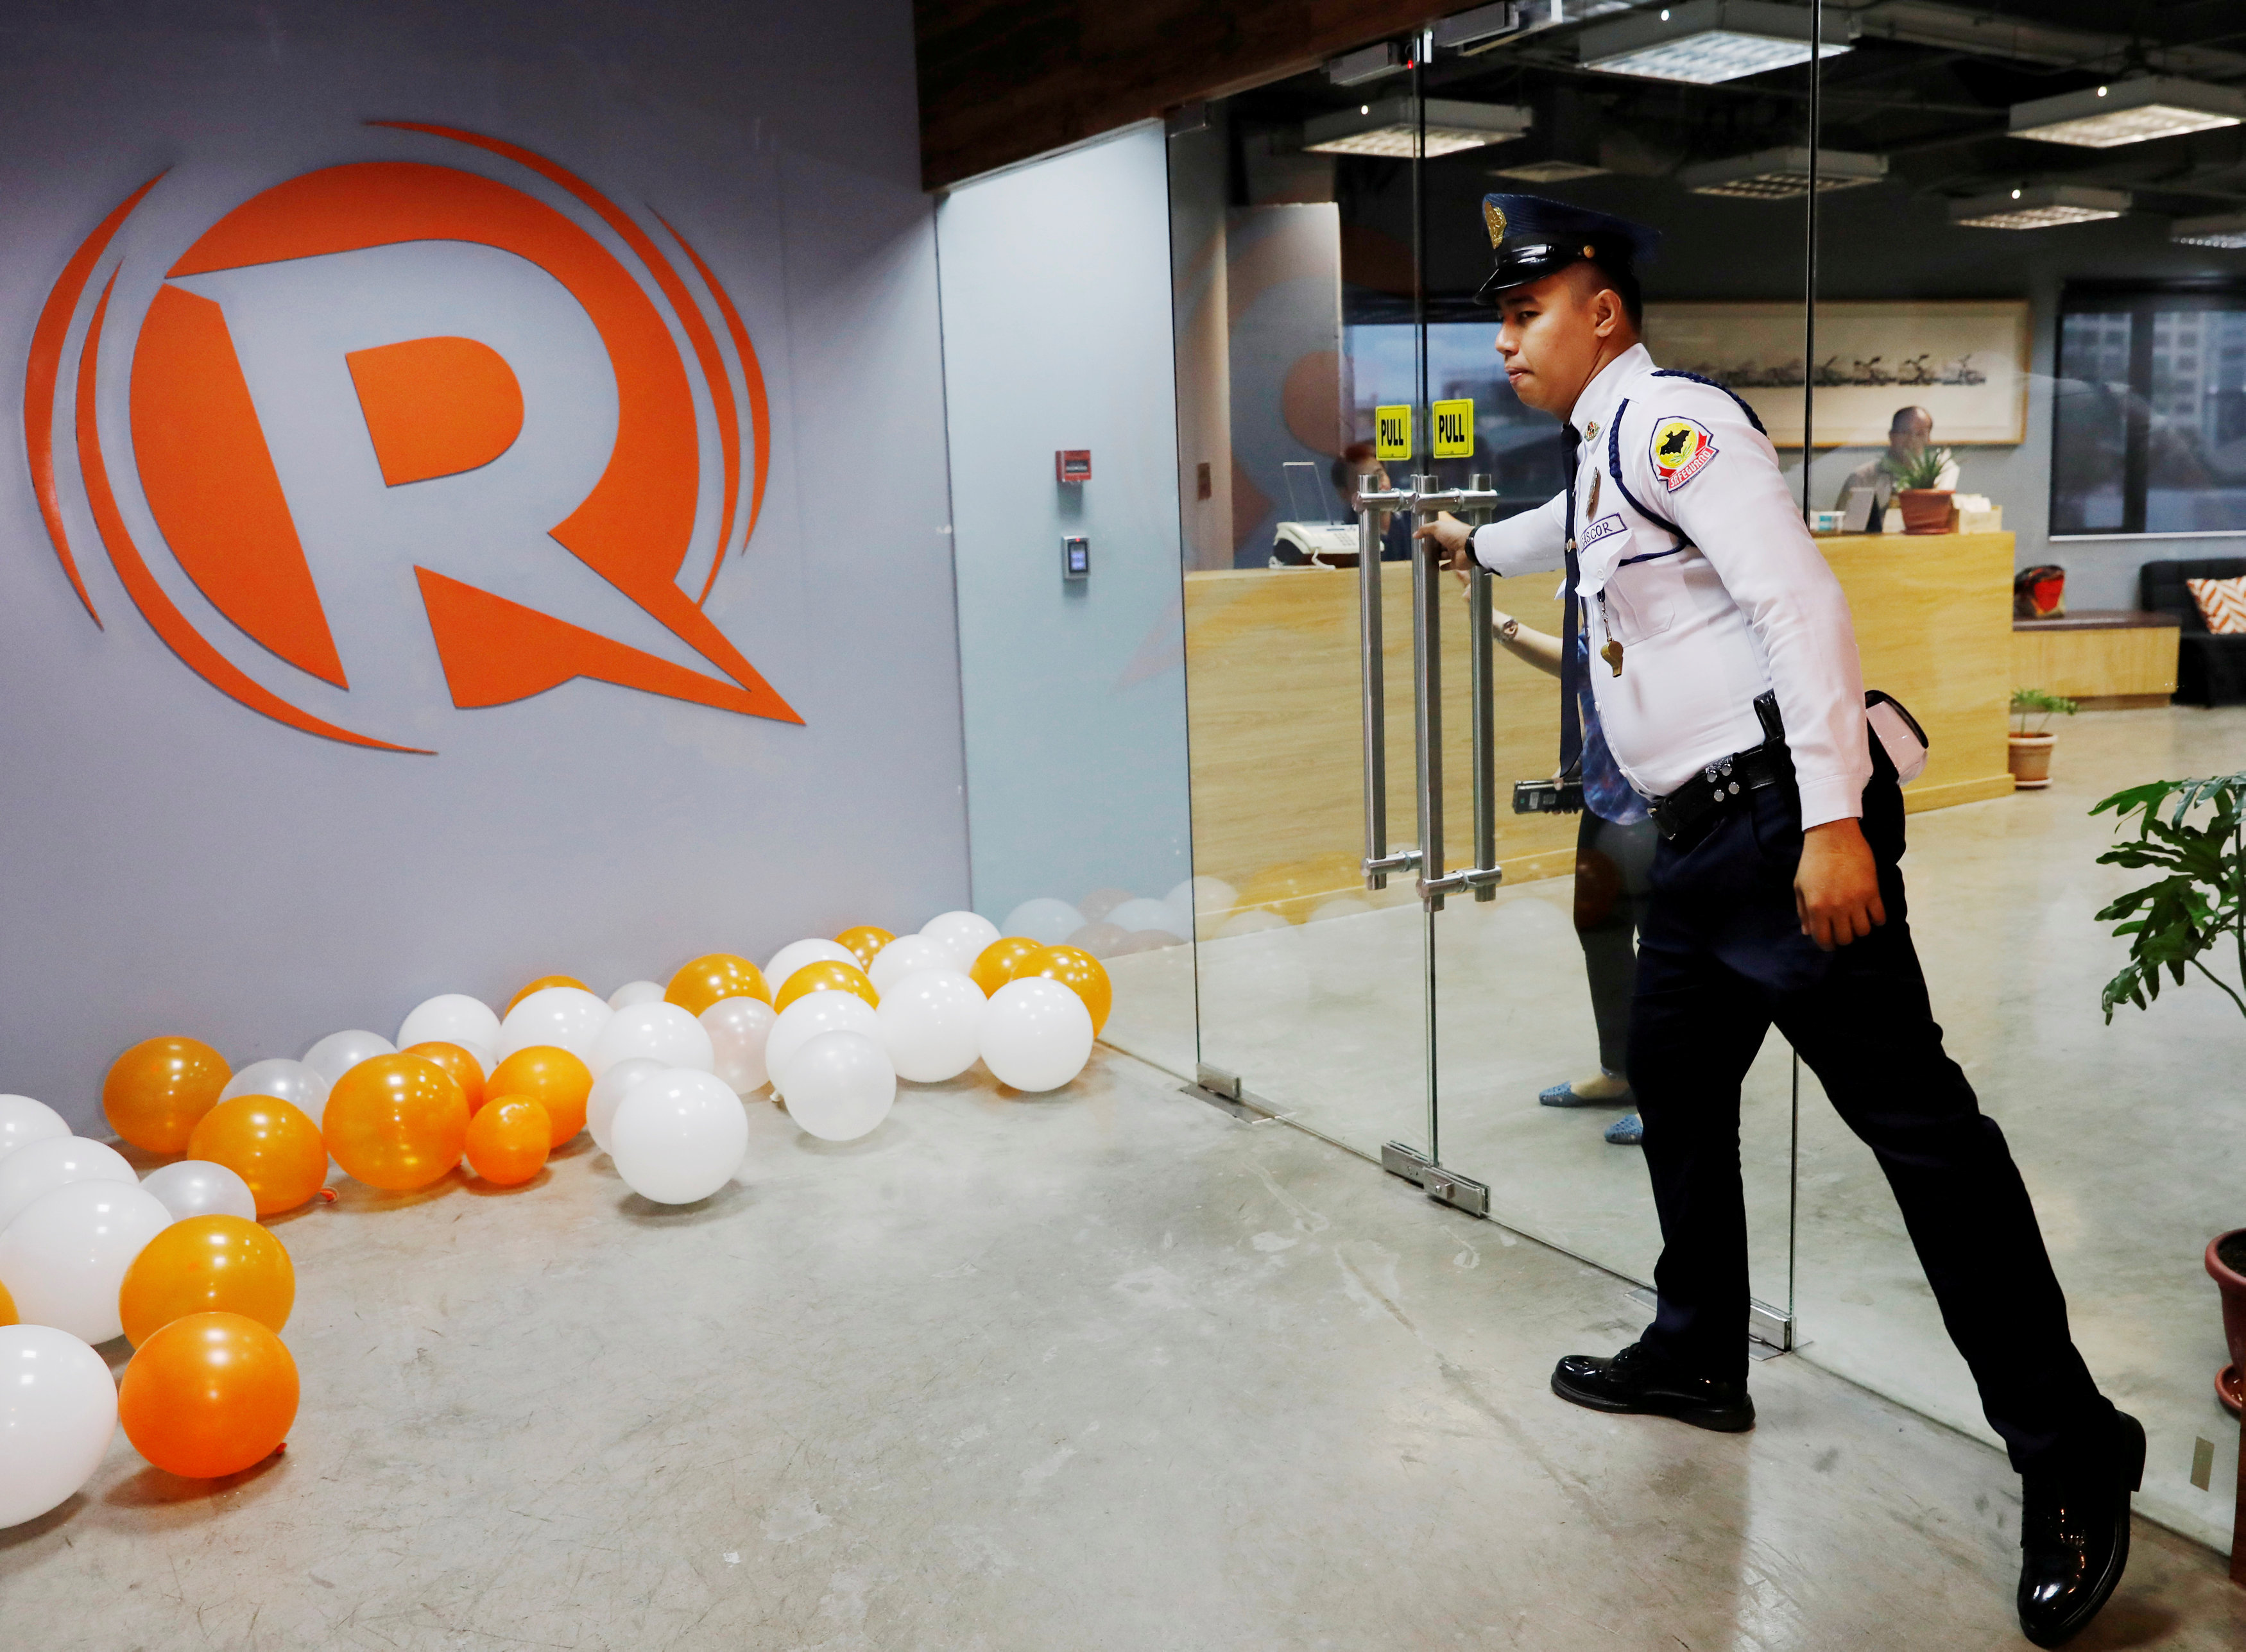 News site head meets Philippine investigators over 'suspicious' complaint